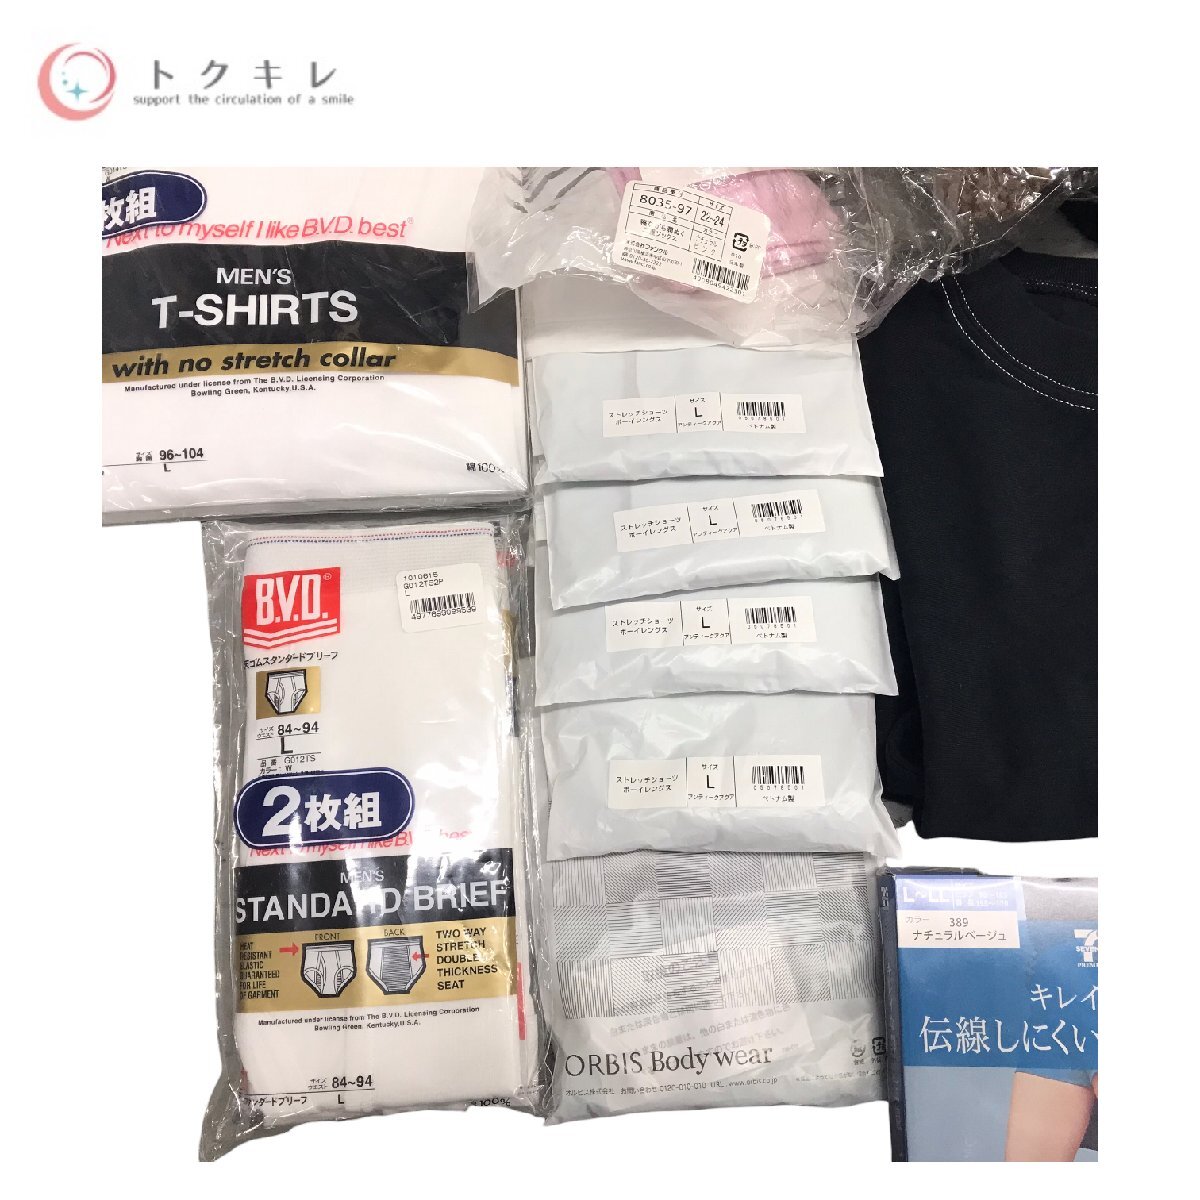 !1 jpy start free shipping detergent clothing etc. large amount 18 point set shiro white fabric so crucian - Gunze B.V.D. Tsumori Chisato Jeanasis pyjamas 